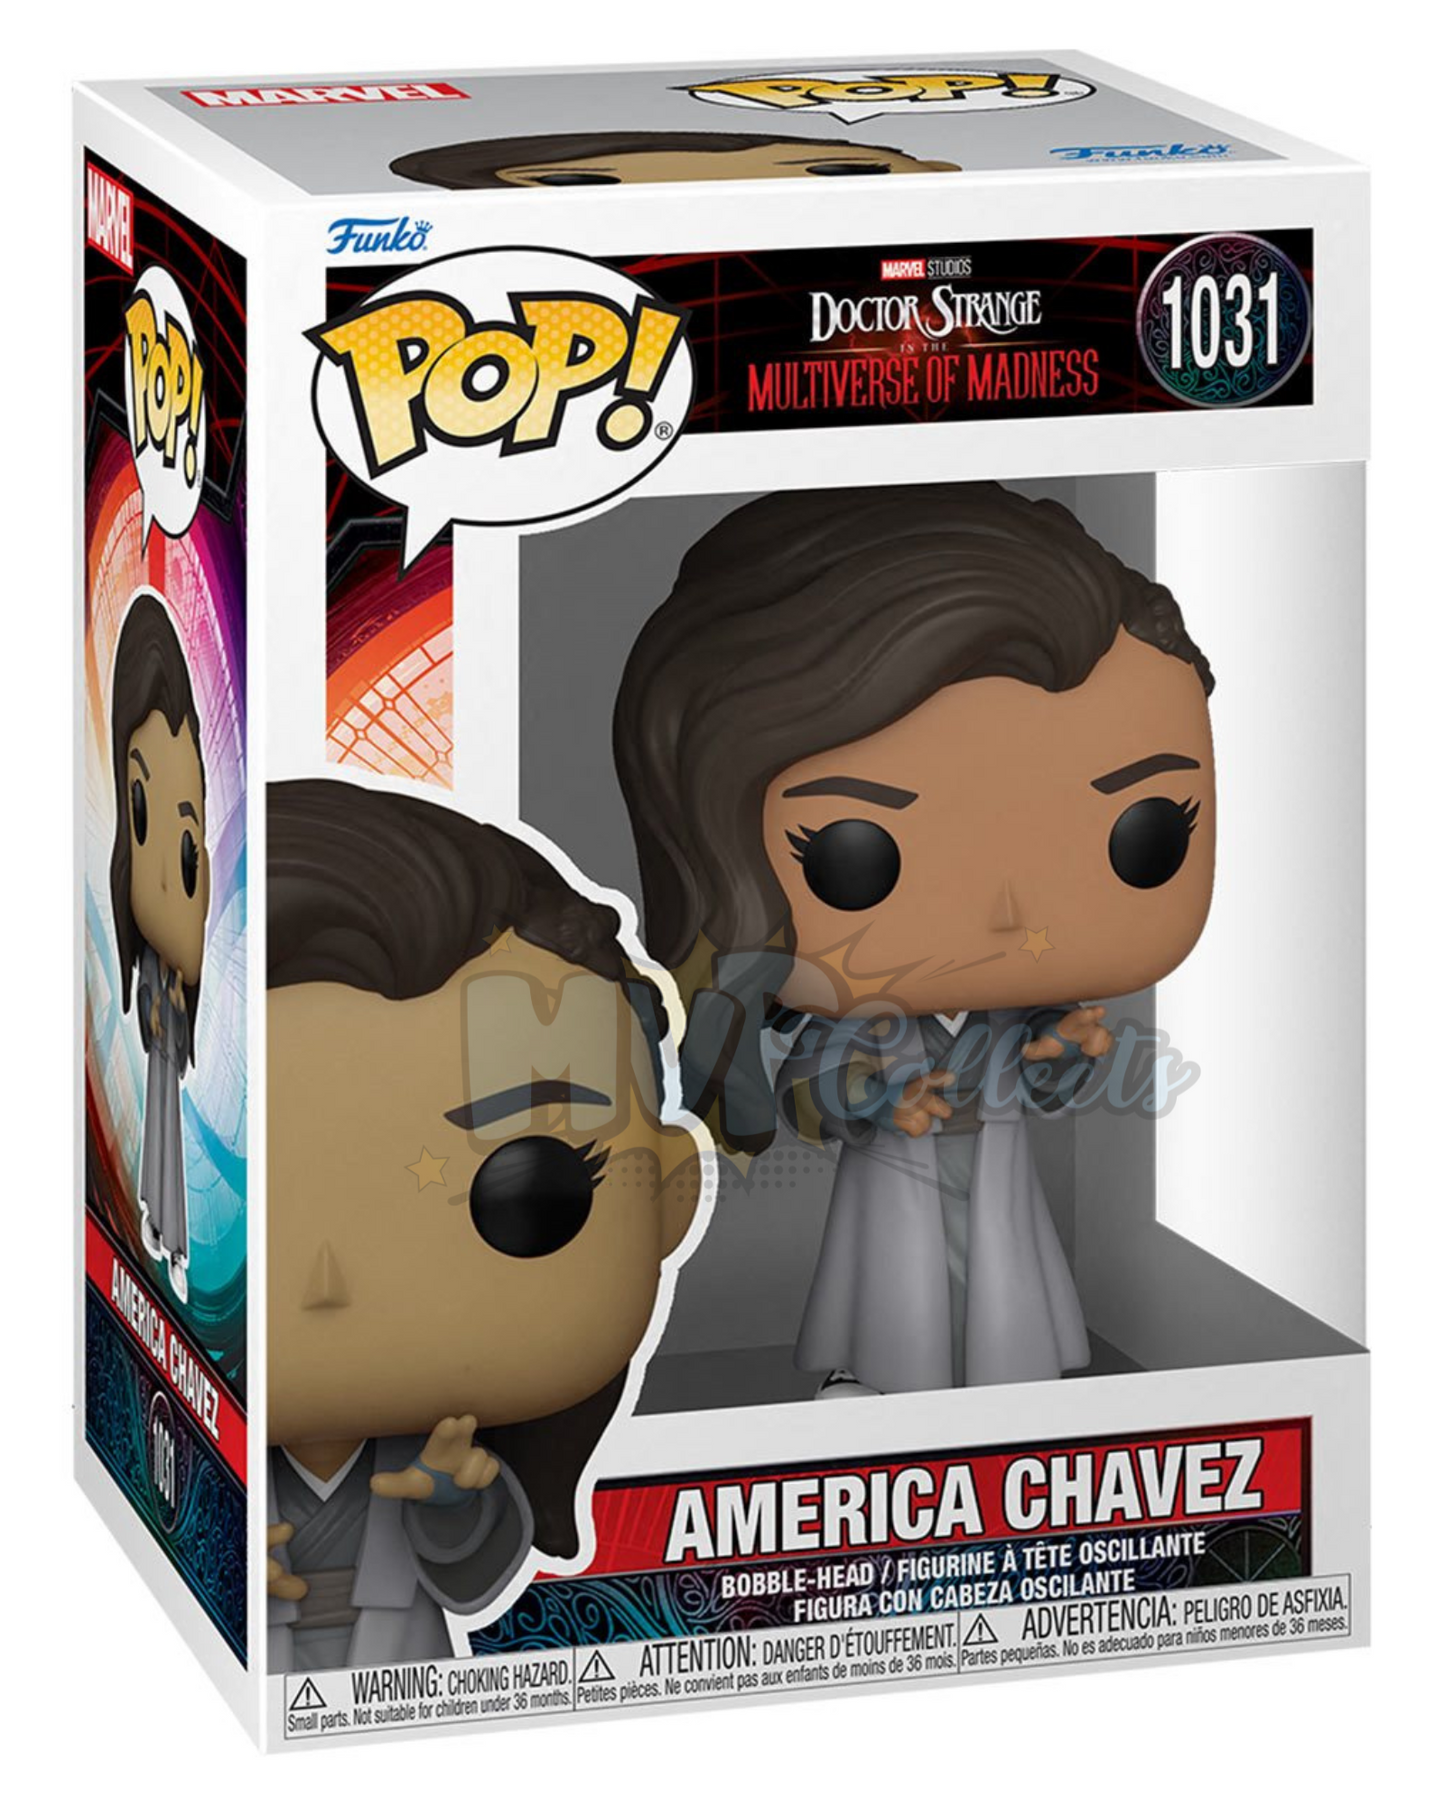 America Chavez POP! Dr. Strange Multiverse of Madness - 1031